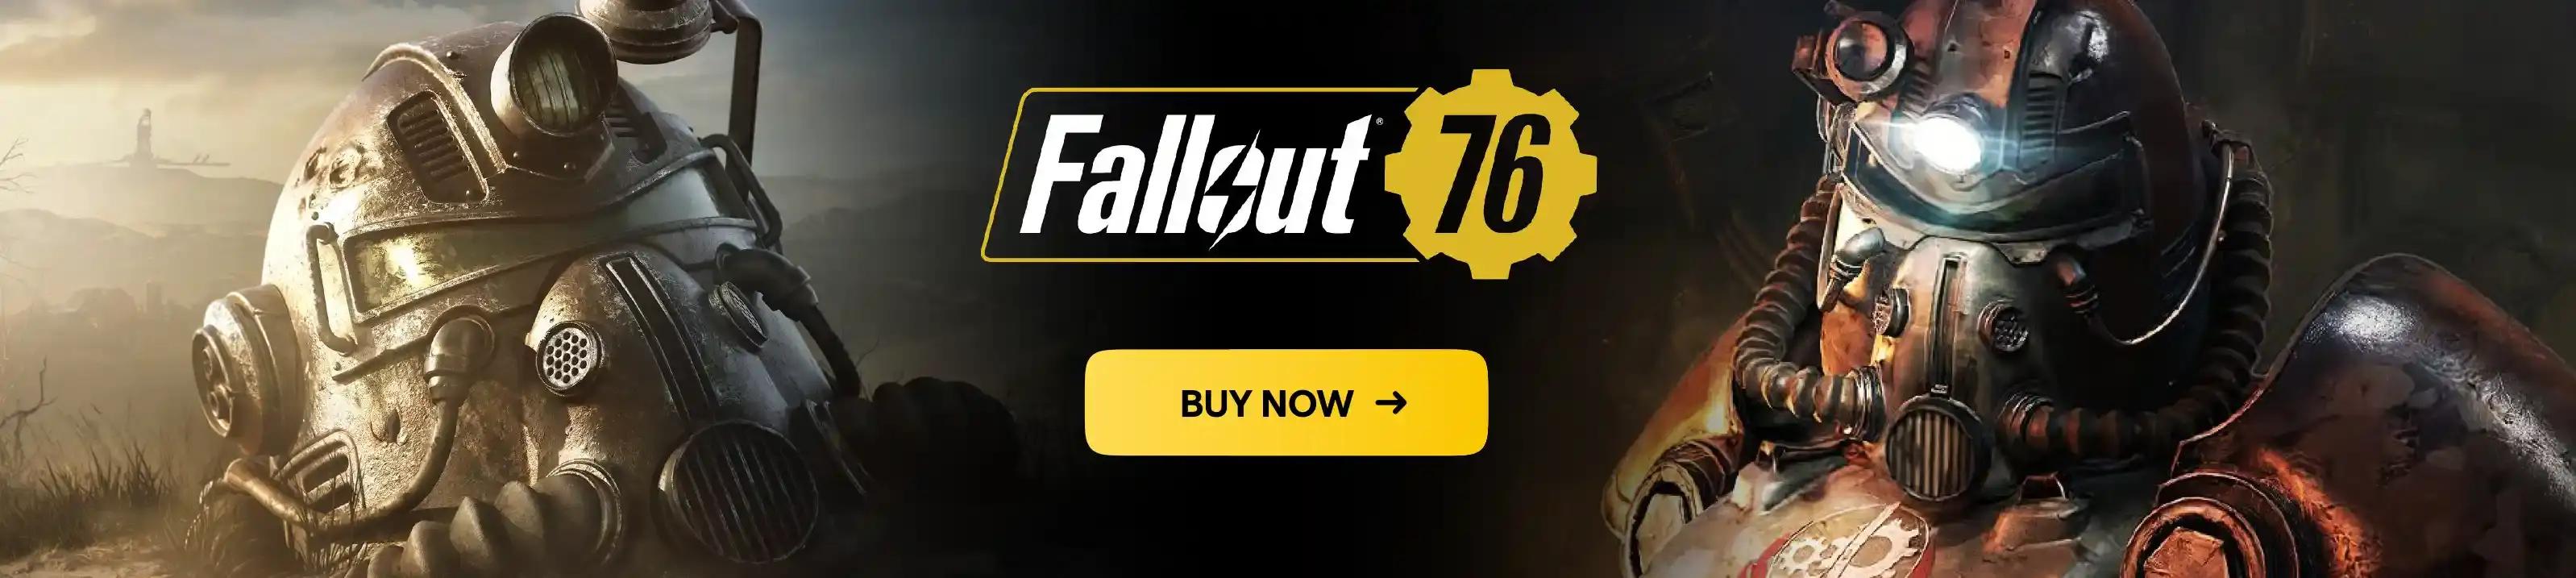 Fallout 76 Mobile